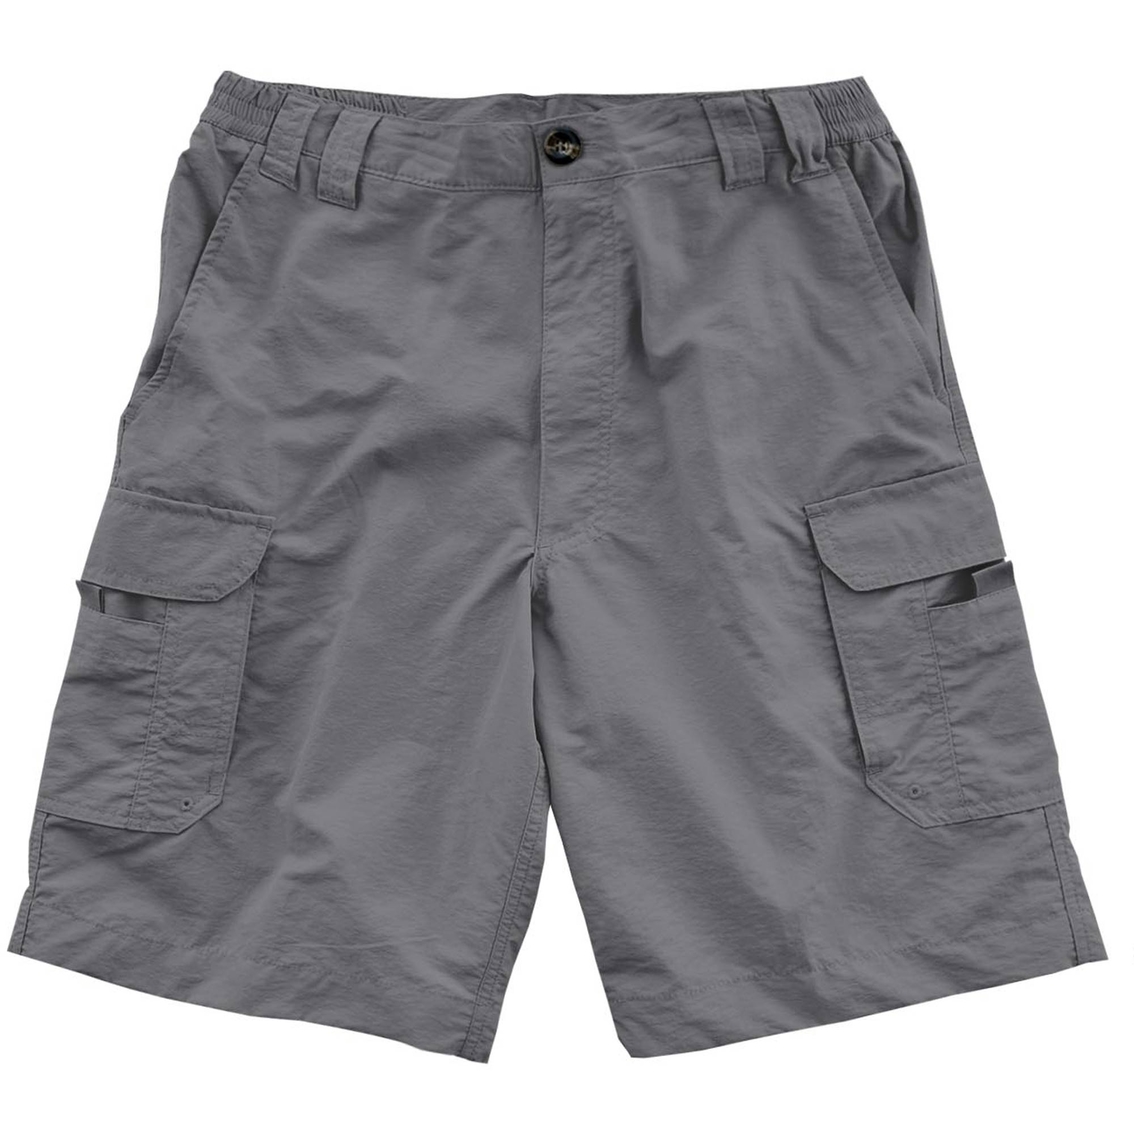 Joe Marlin Velcro Shorts | Shorts | Clothing & Accessories | Shop The ...